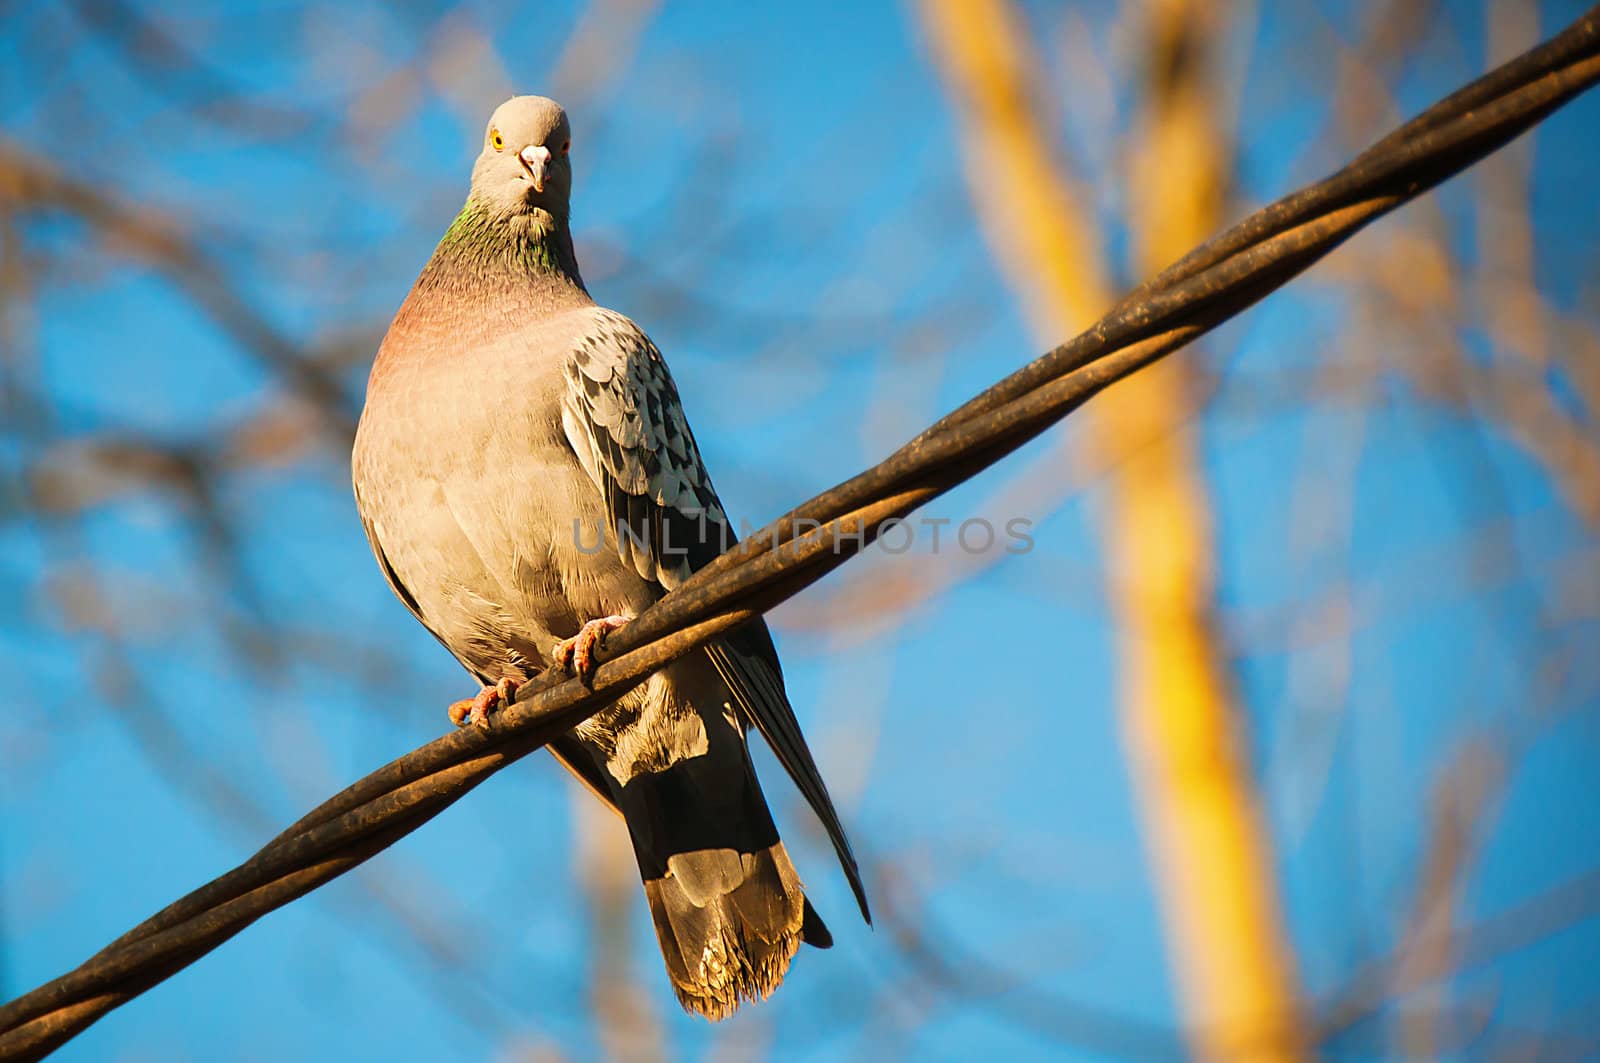 Pigeon by alena0509